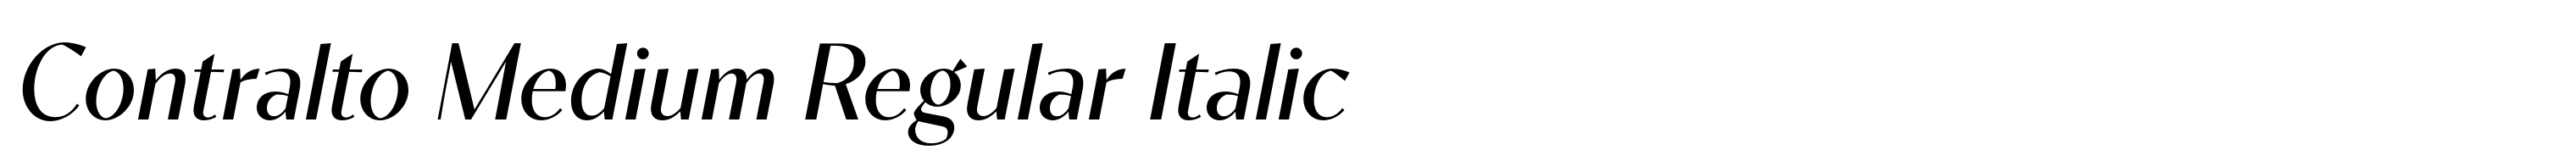 Contralto Medium Regular Italic